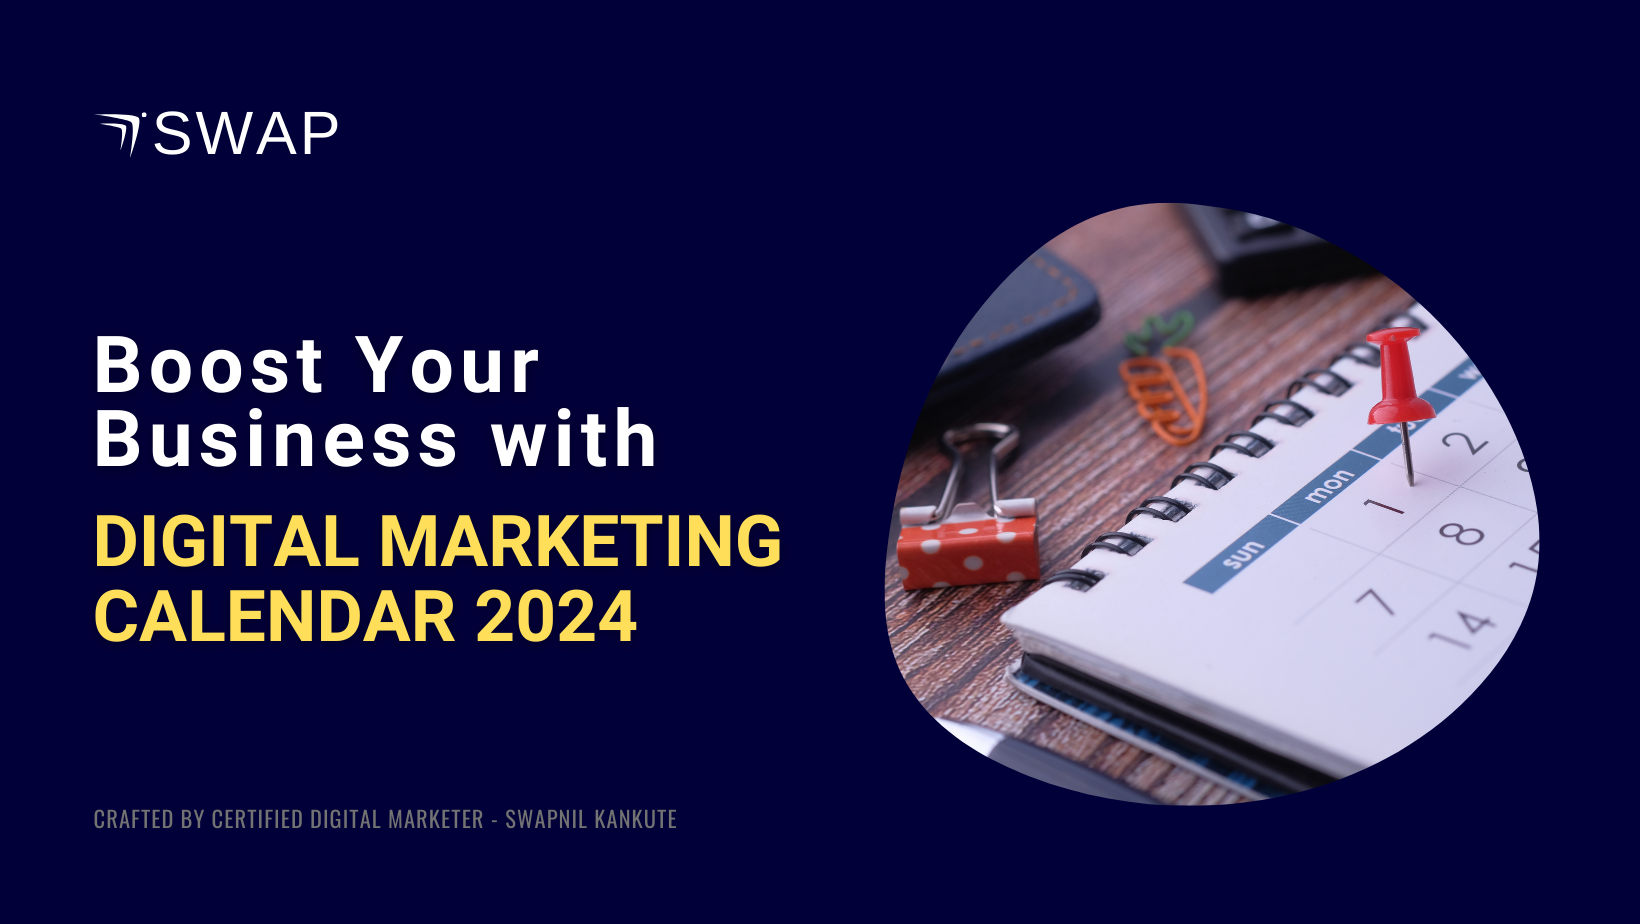 Creating Your Ultimate Digital Marketing Calendar for 2024